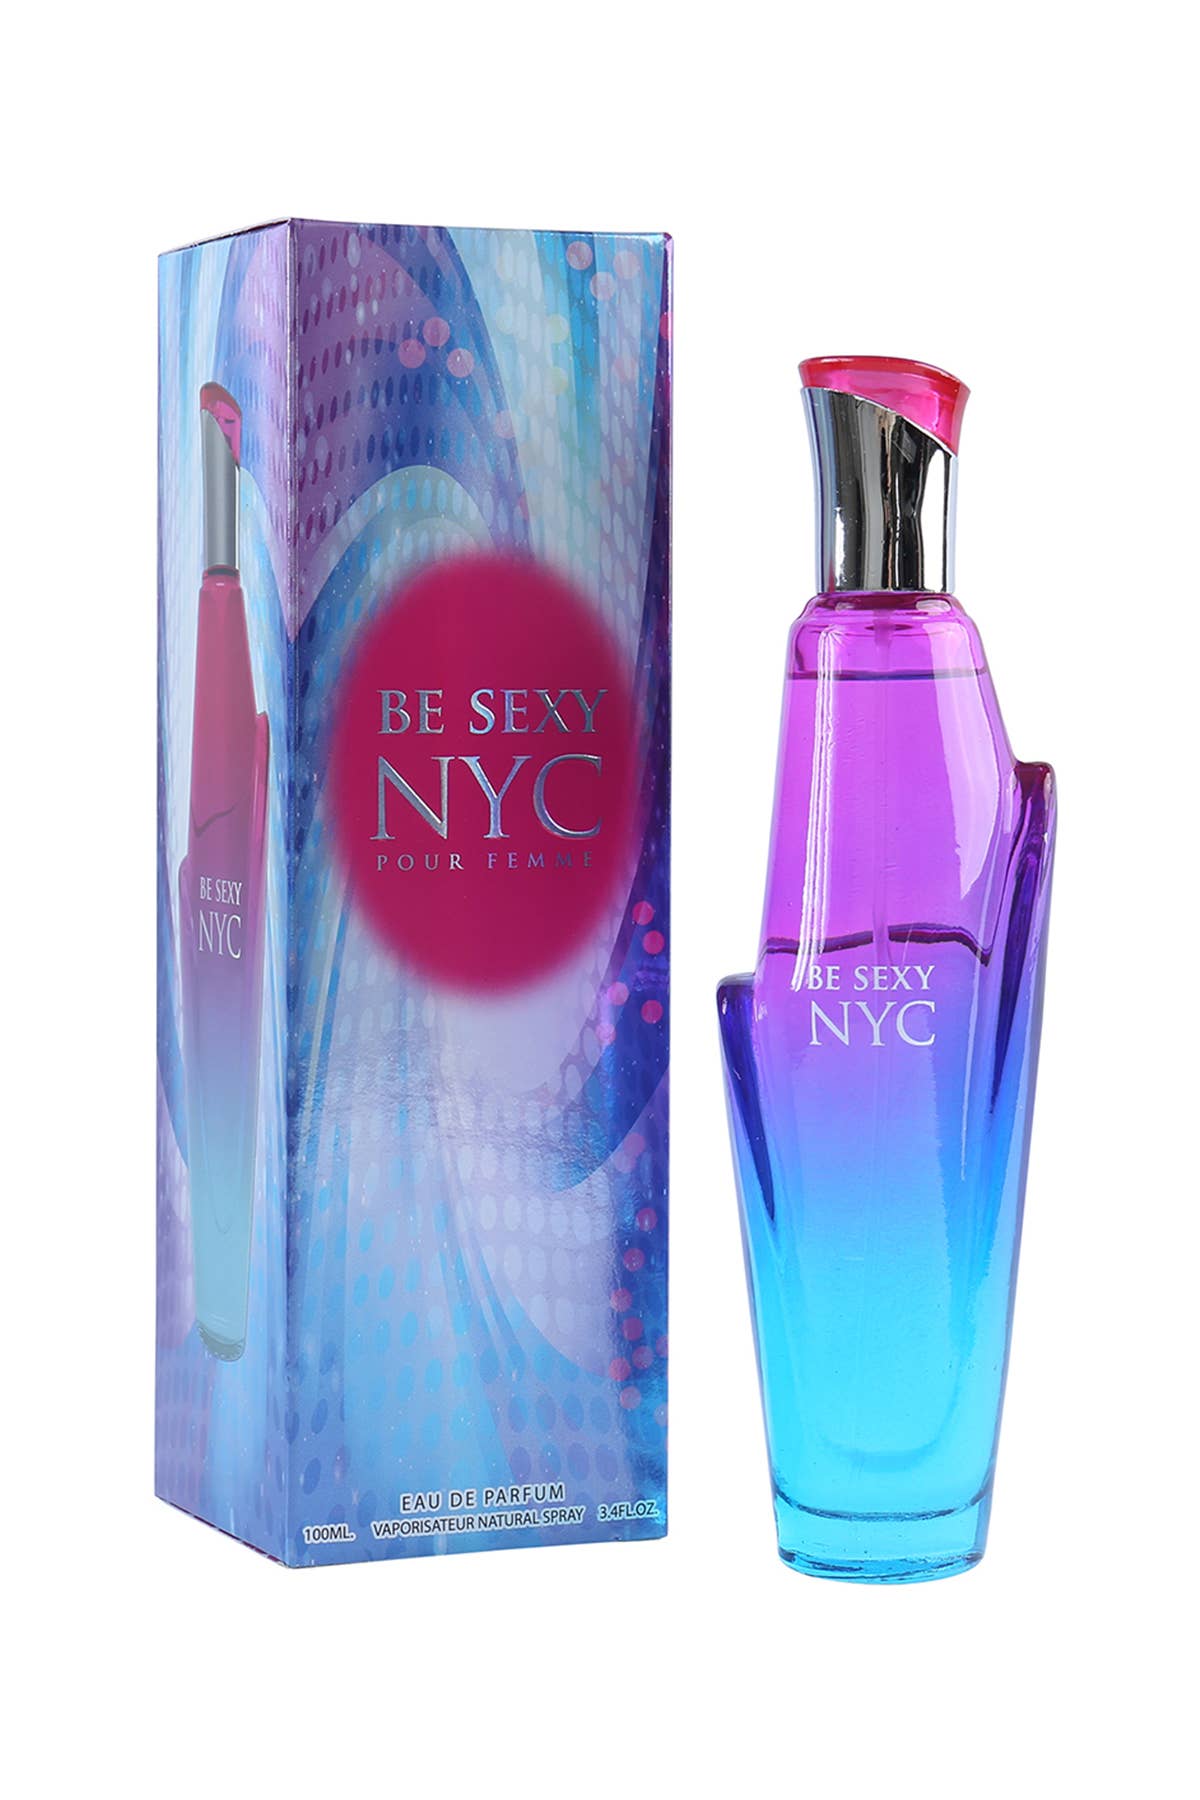 BE SEXY NYC Perfume 3.4 OZ